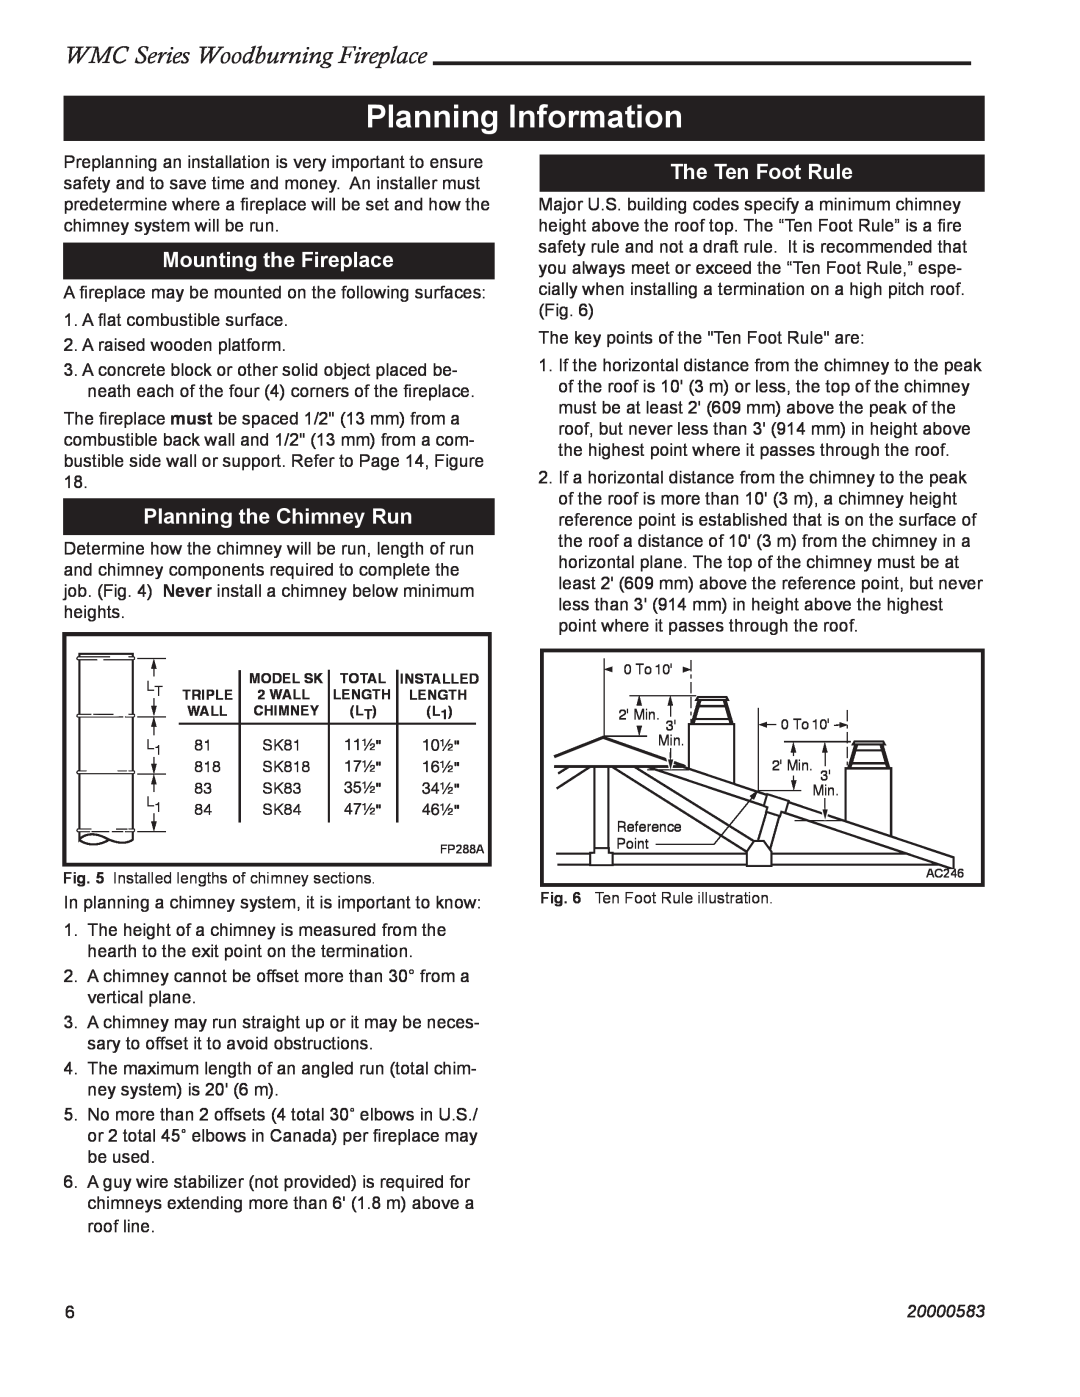 CFM Corporation WMC36 WMC42 manual Planning Information, WMC Series Woodburning Fireplace, Mounting the Fireplace, 20000583 